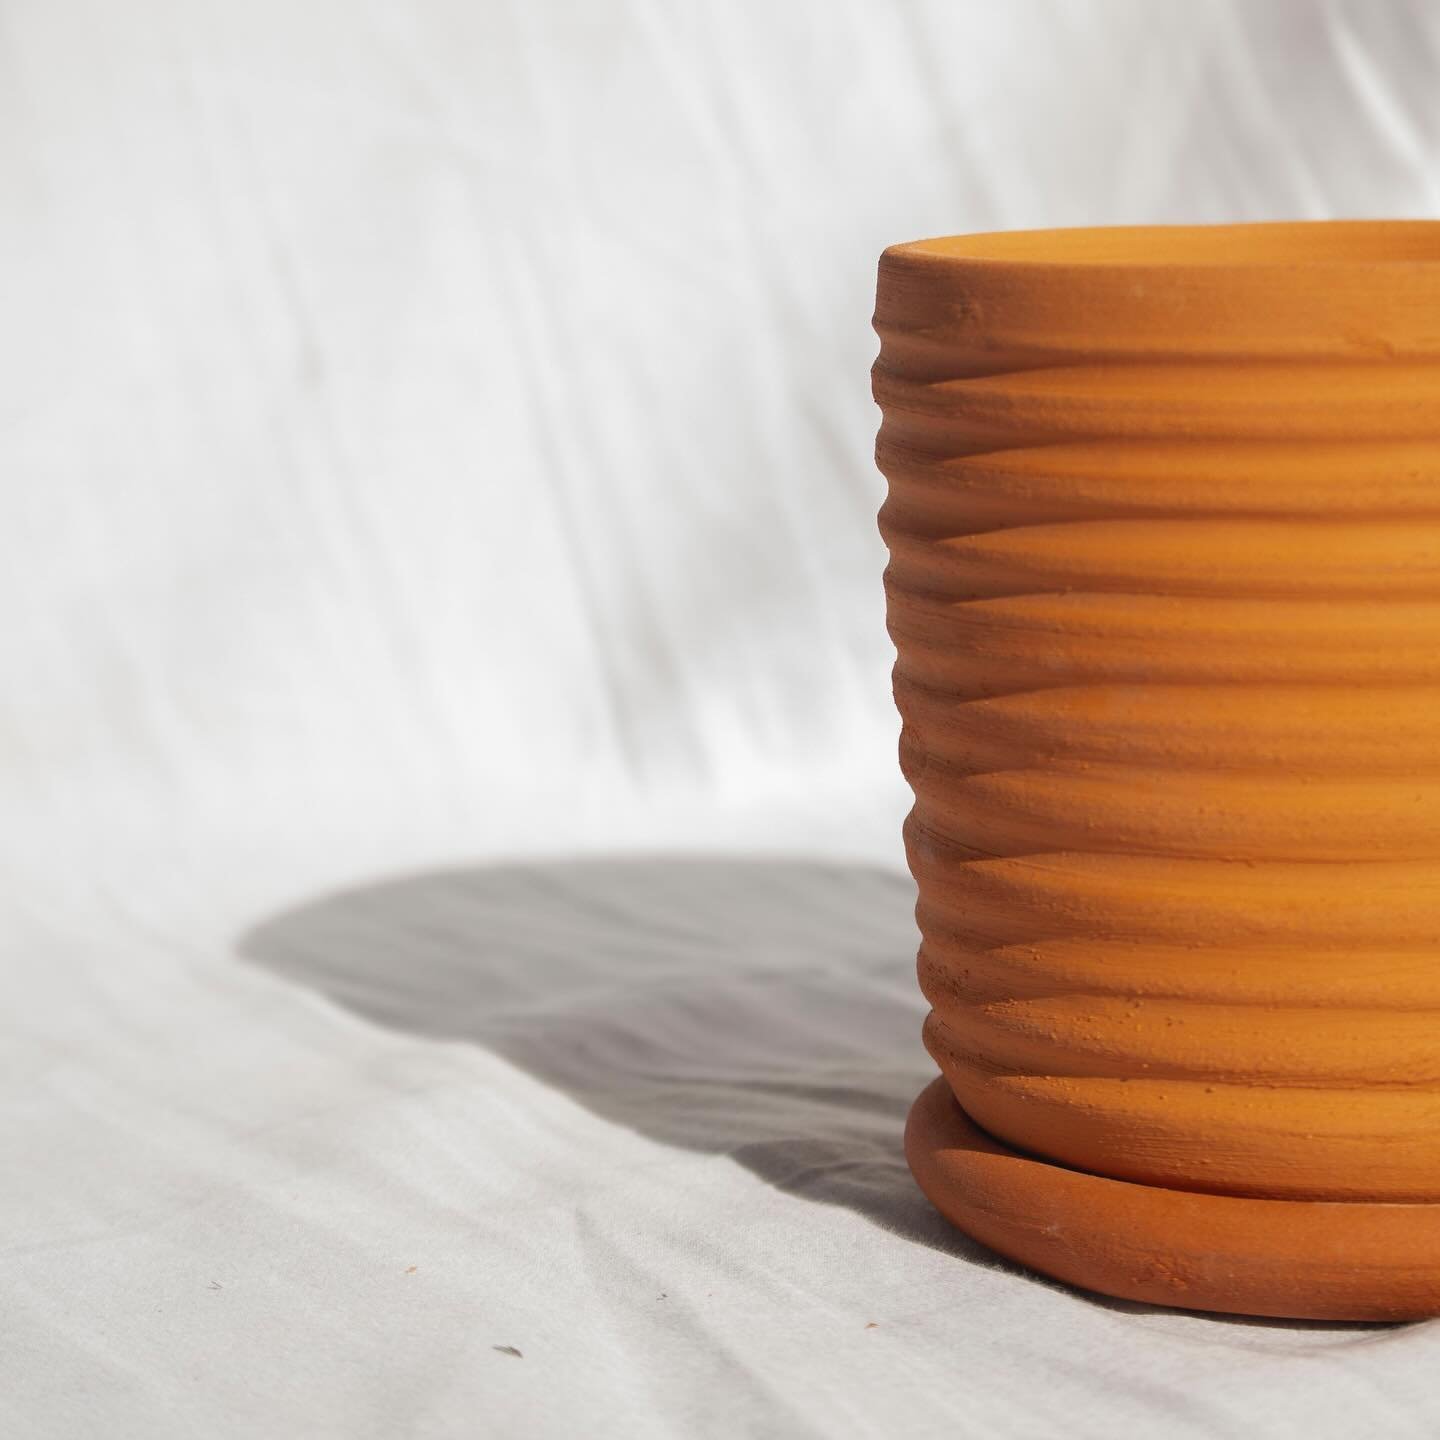 Ripple plant pot - wheel thrown terra cotta vessel for @oddbirdfair this weekend!
.
.
.
#terracotta #plantpot #pottery #ceramics #handmade #handmadepottery #modernceramics #handmadeceramics #yeg #yegmade #yegdesign #yegmaker #yegarts #visualvibes #ma